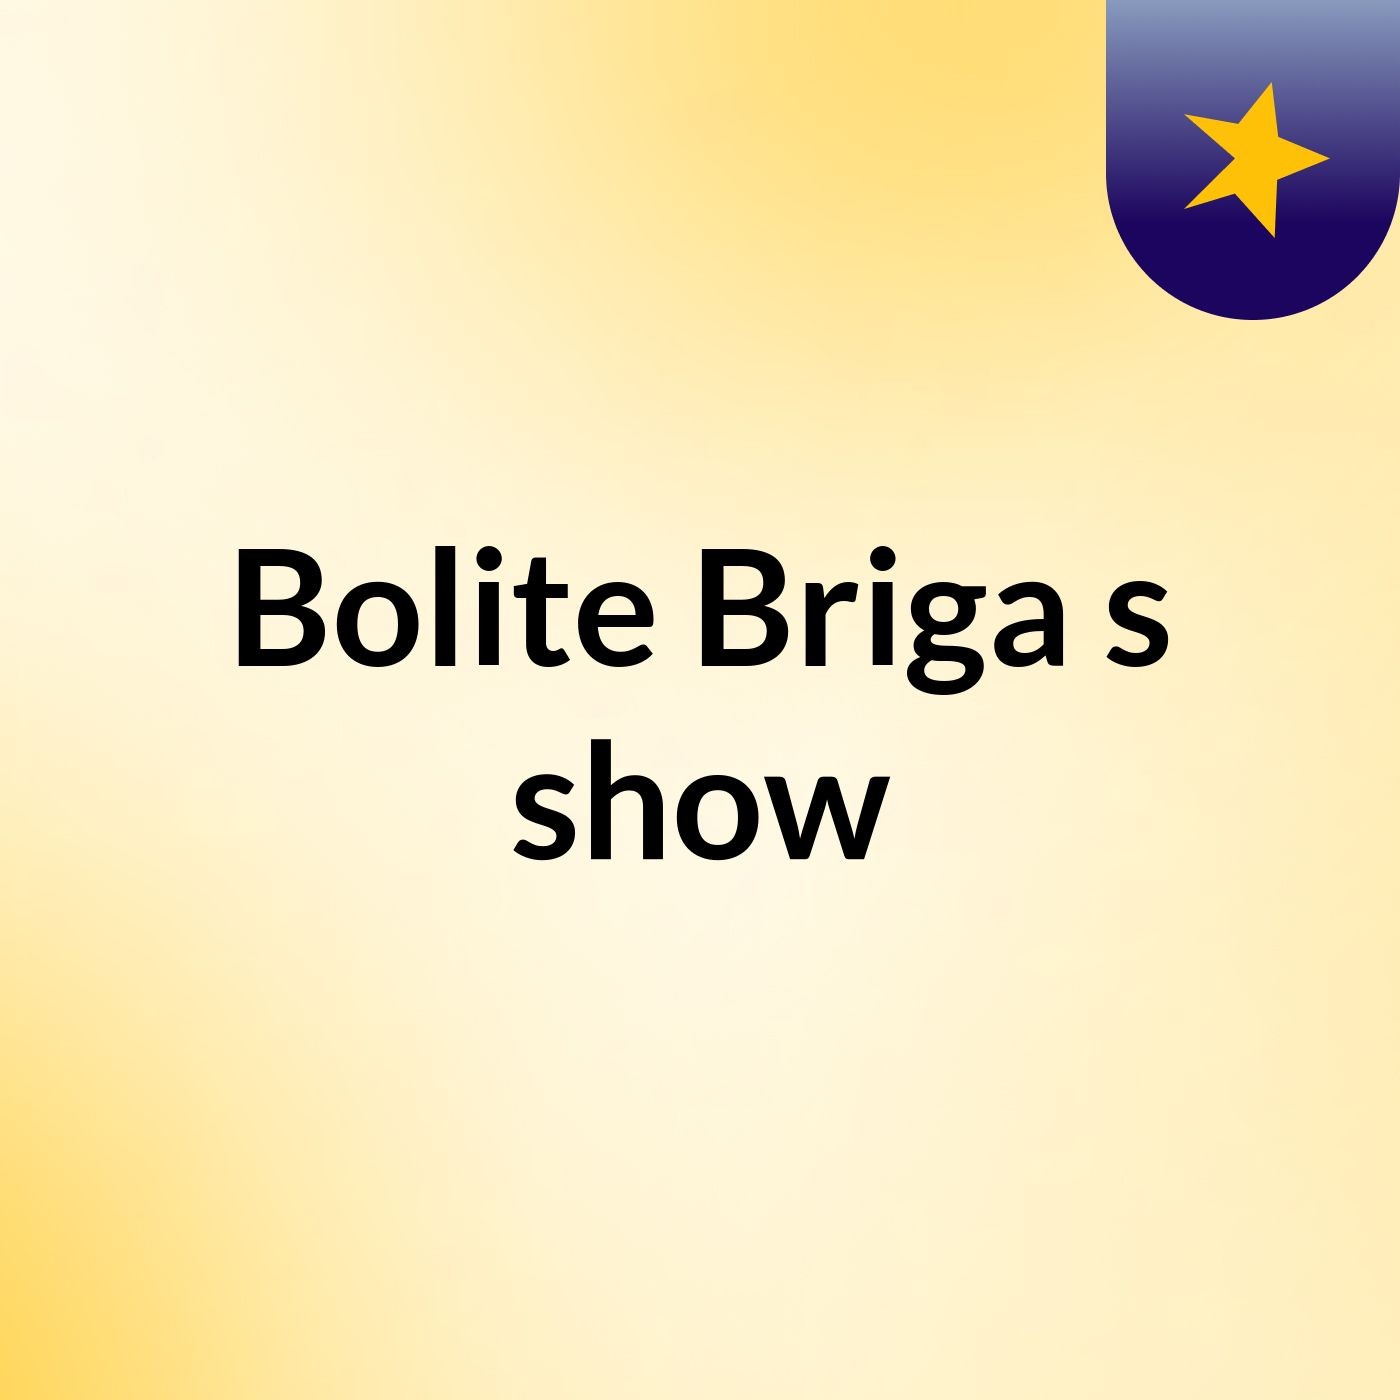 Bolite Briga's show